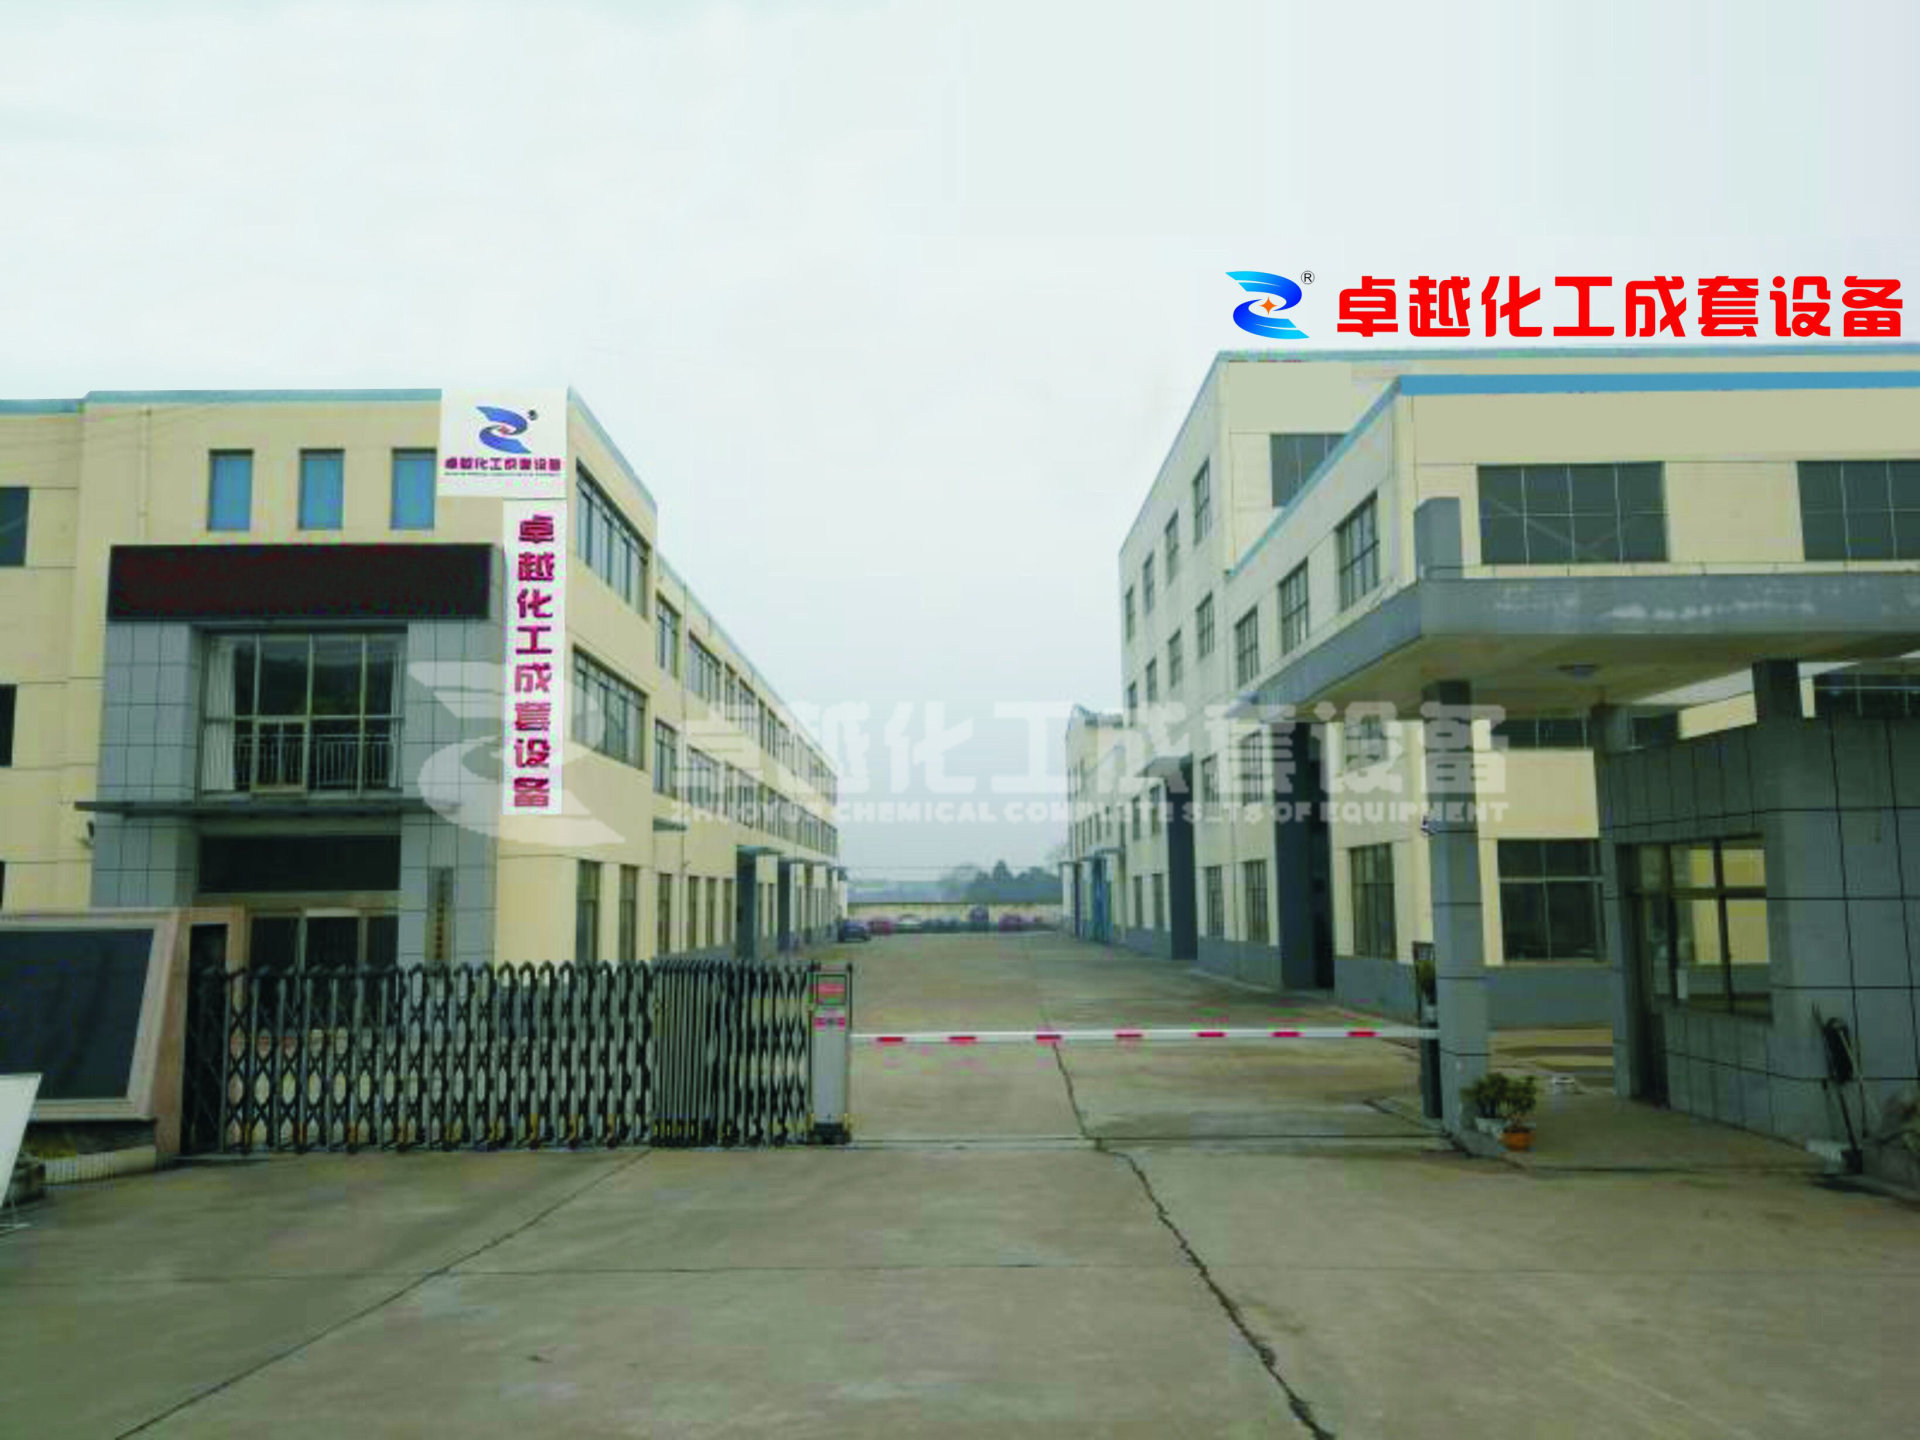 Changzhou factory exterior view